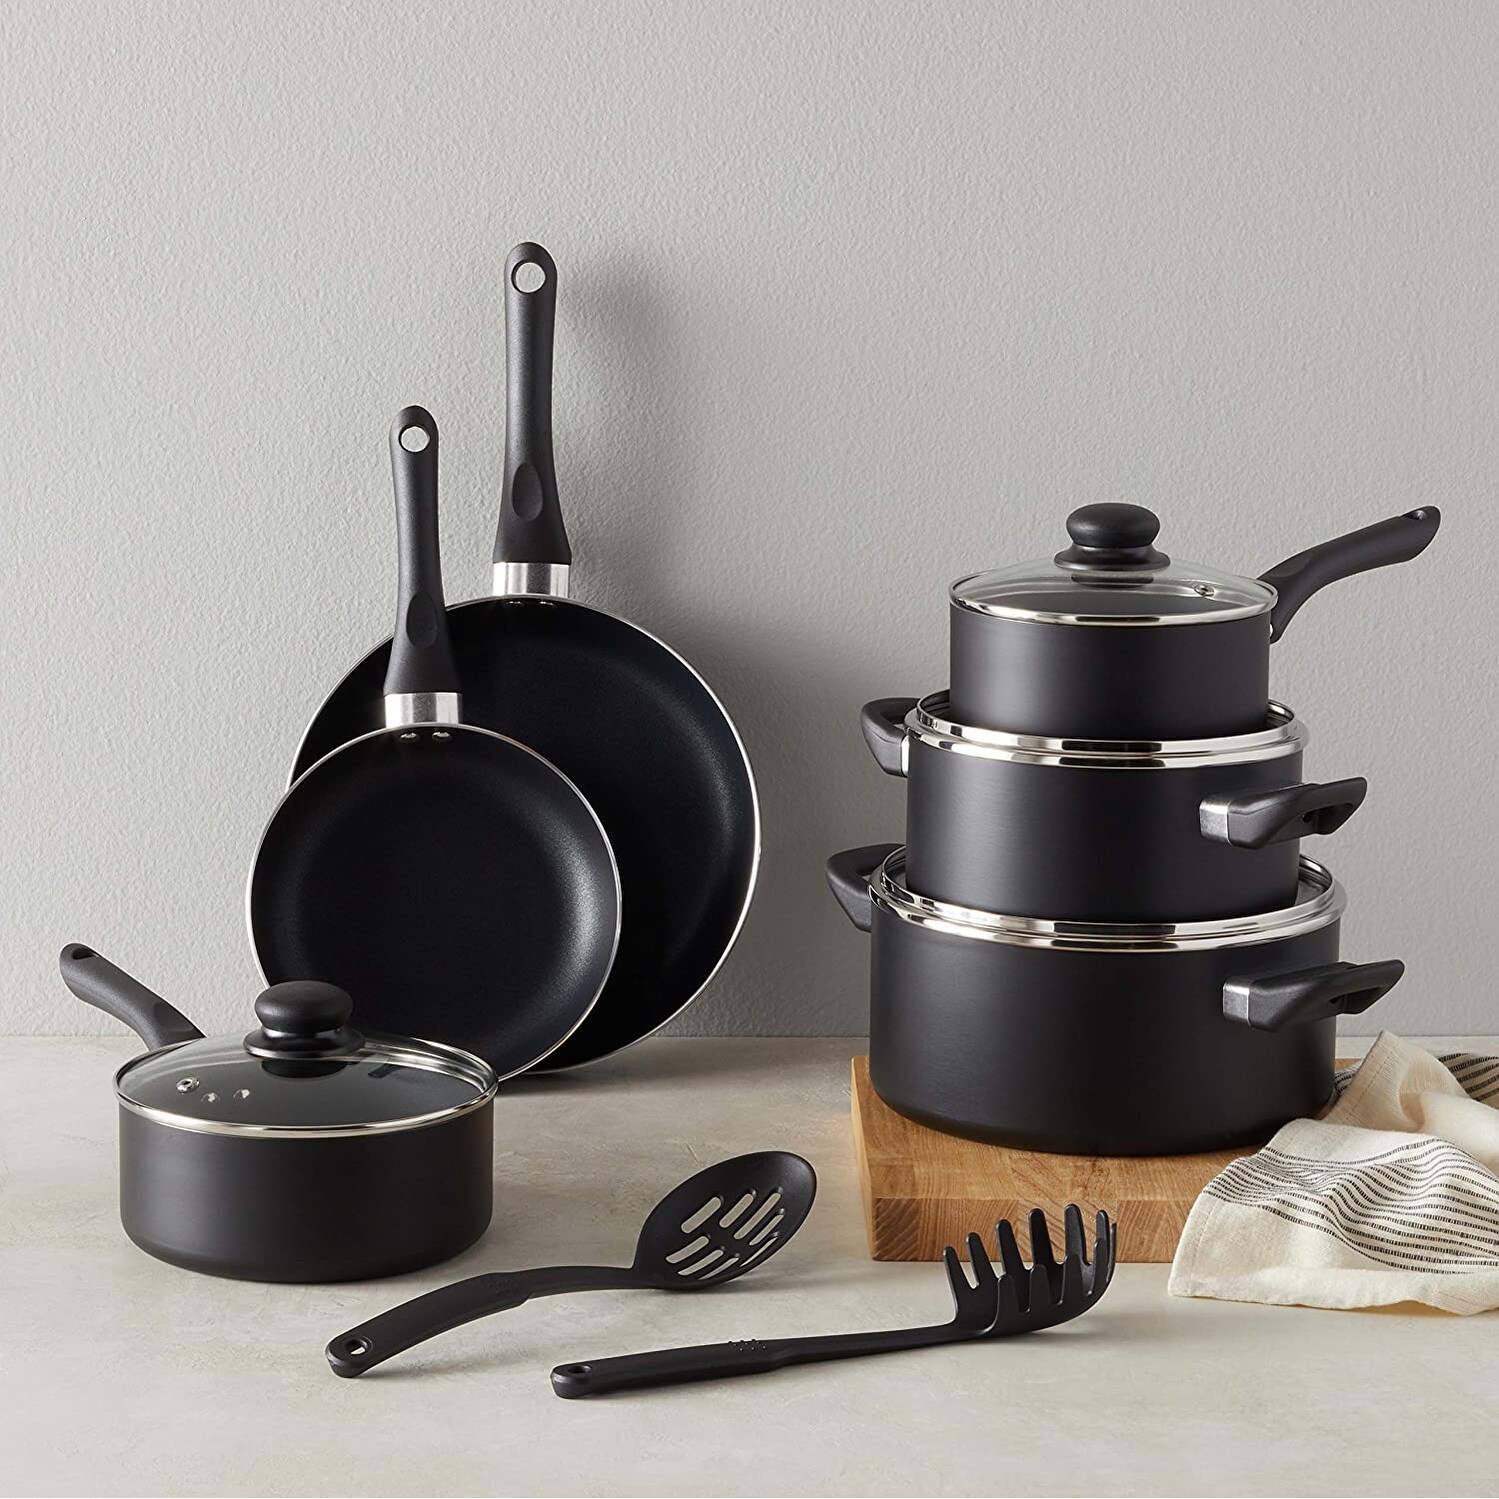 $30.78:  Basics Non-Stick Cookware 8-Piece Set, Pots and